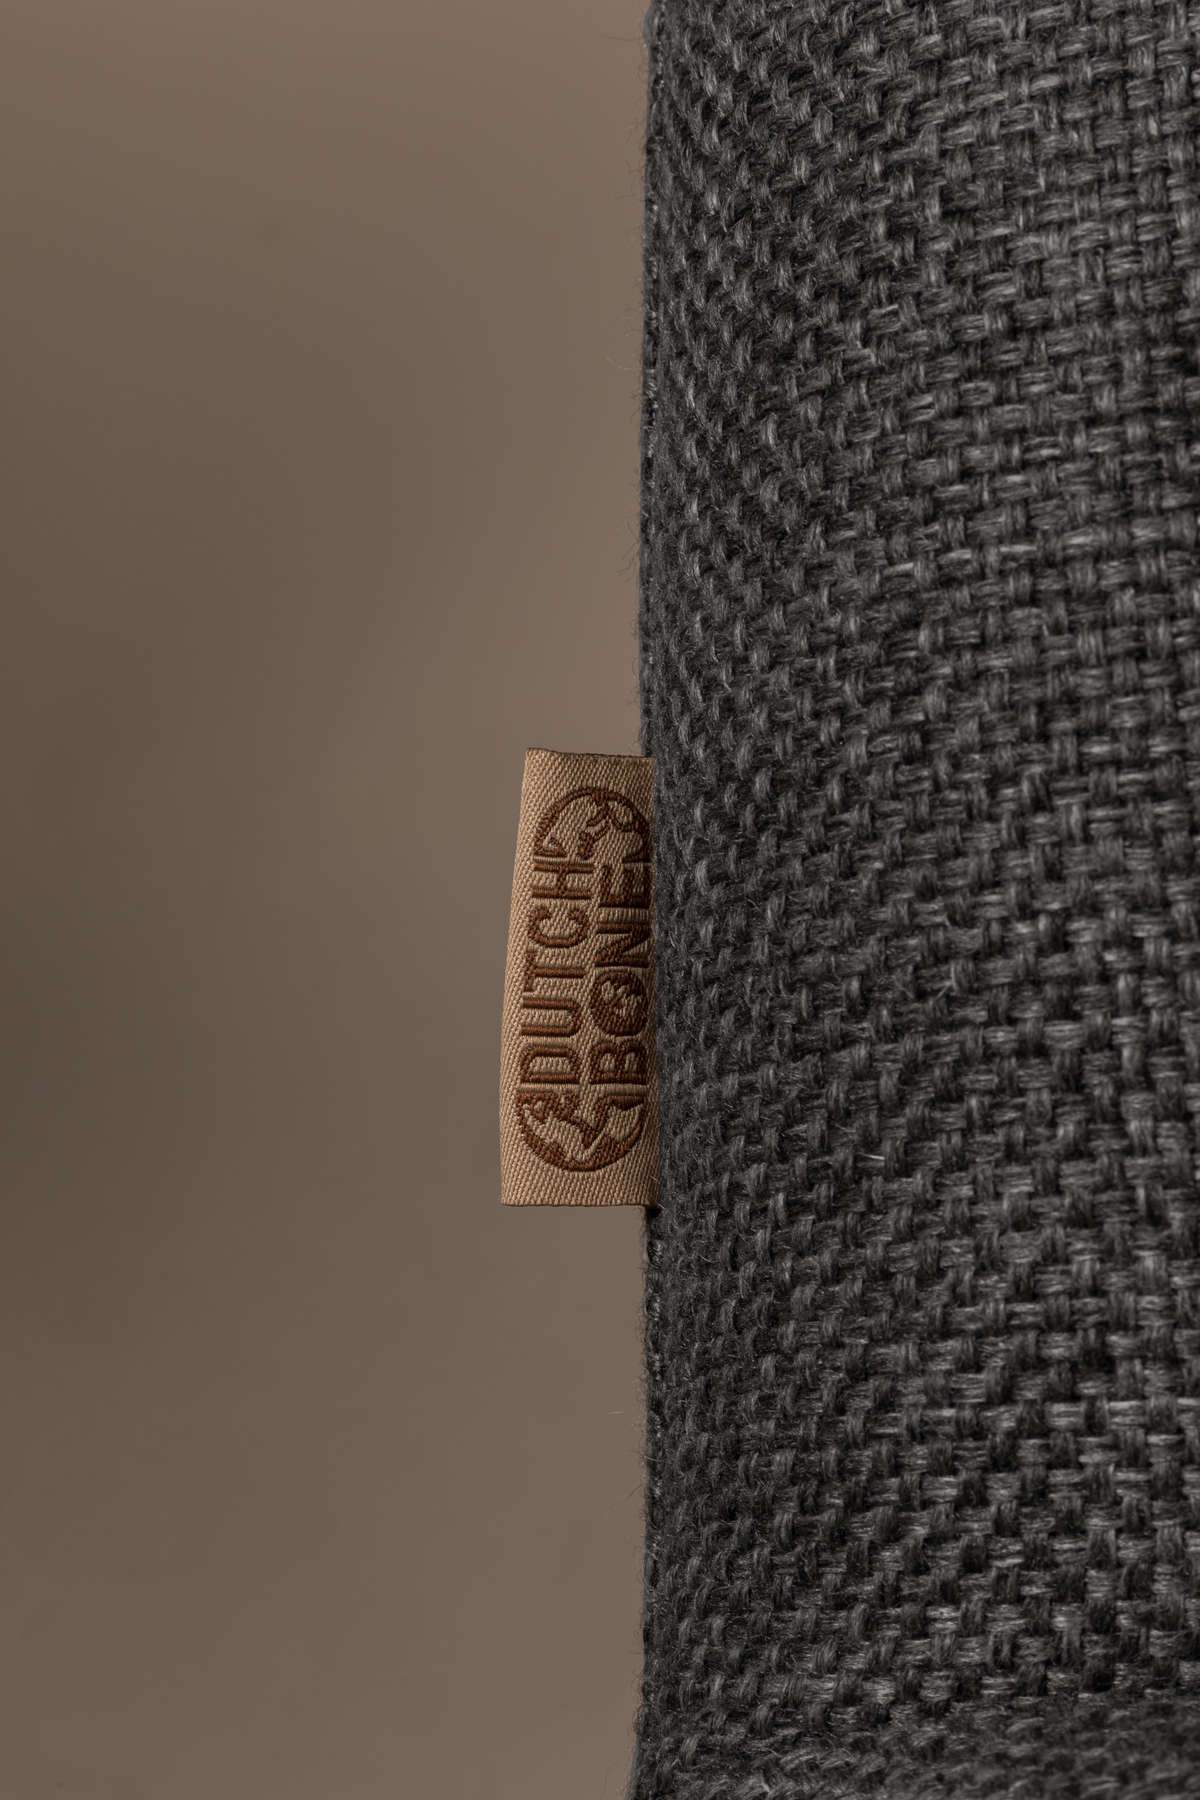 MINI BAR swivel chair dark grey, Dutchbone, Eye on Design